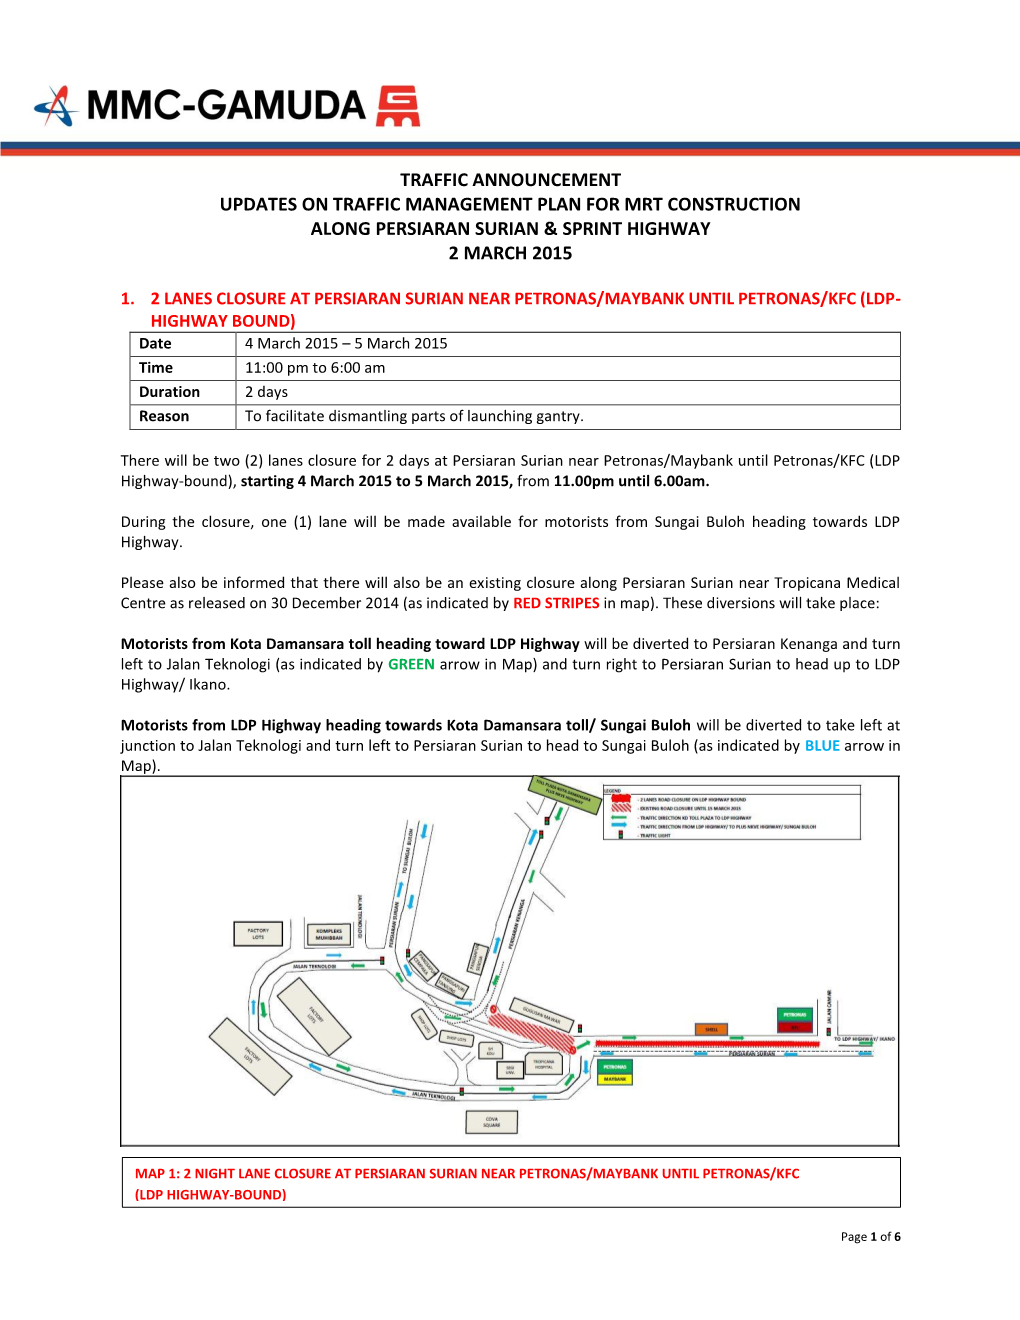 Traffic Announcement Updates on Traffic Management Plan for Mrt Construction Along Persiaran Surian & Sprint Highway 2 March 2015